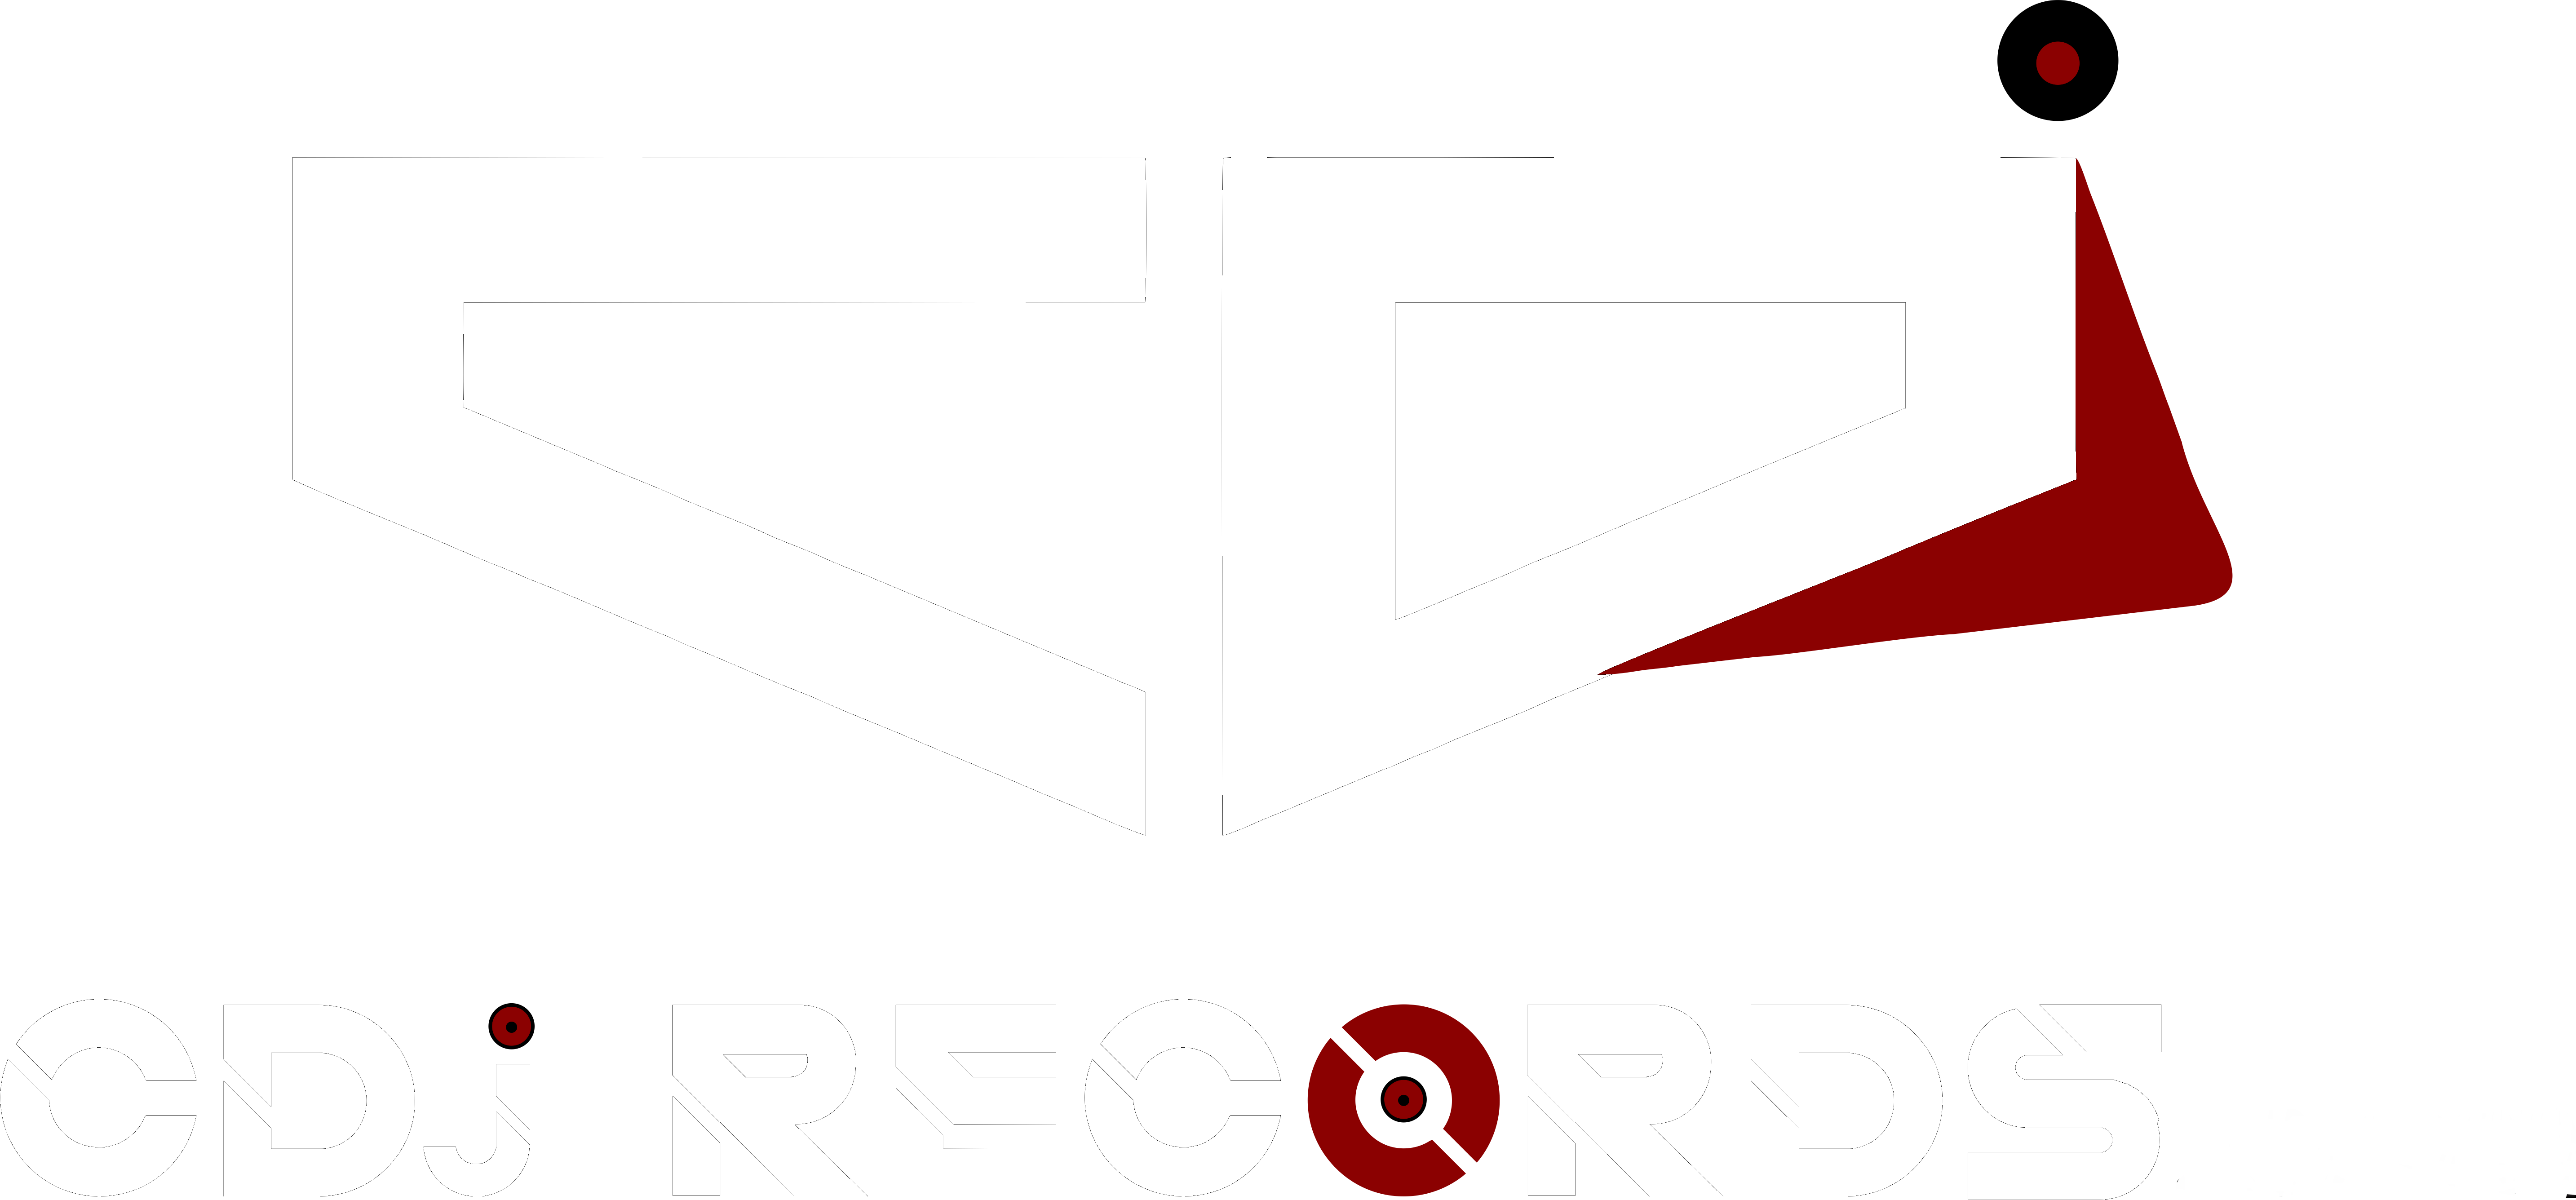 CDJ Records